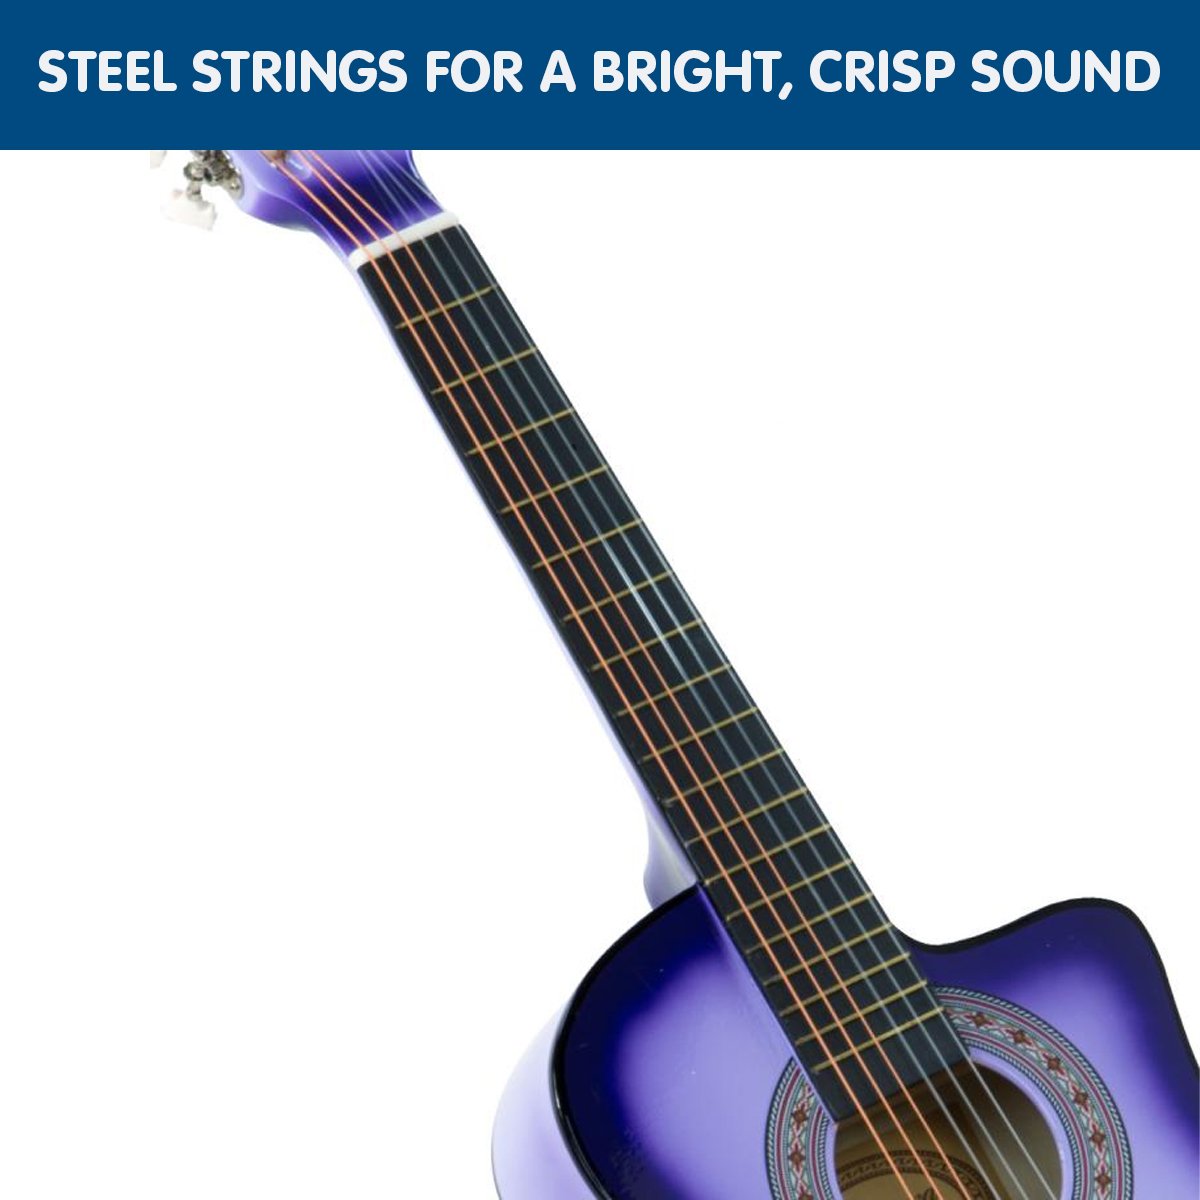 Karrera 38in Pro Cutaway Acoustic Guitar with guitar bag - Purple Burst - SILBERSHELL